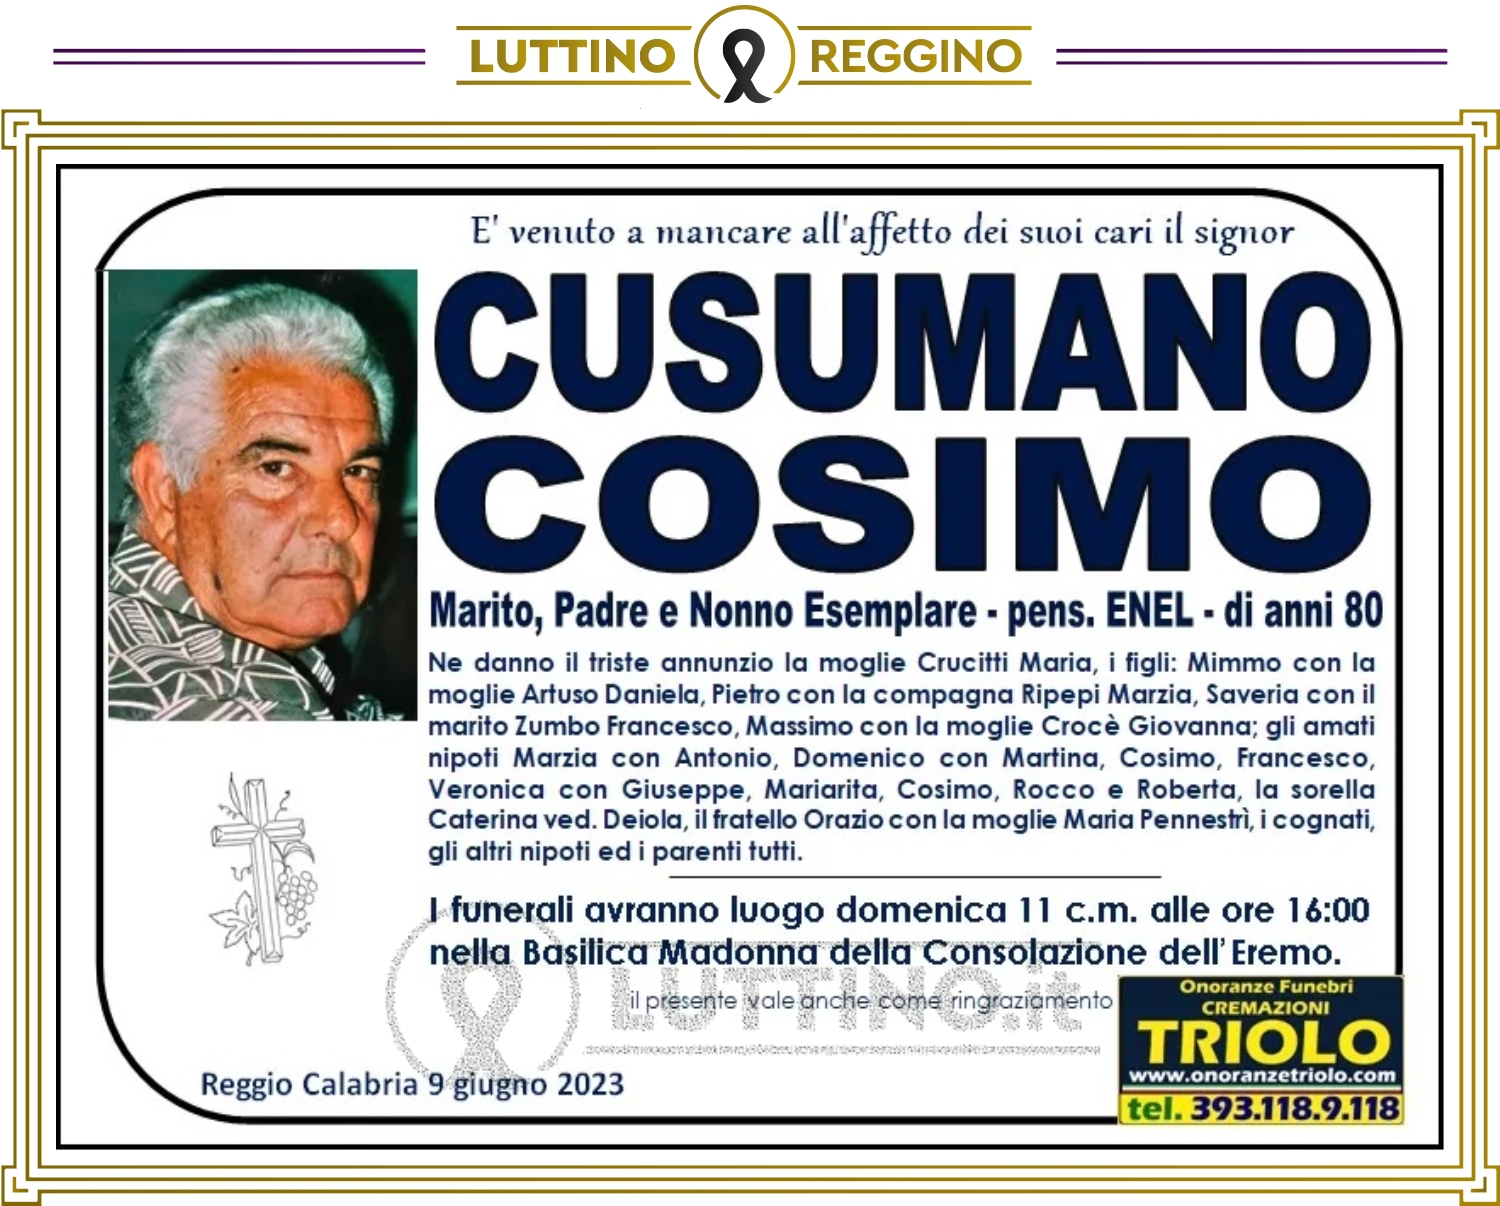 Cosimo Cusumano